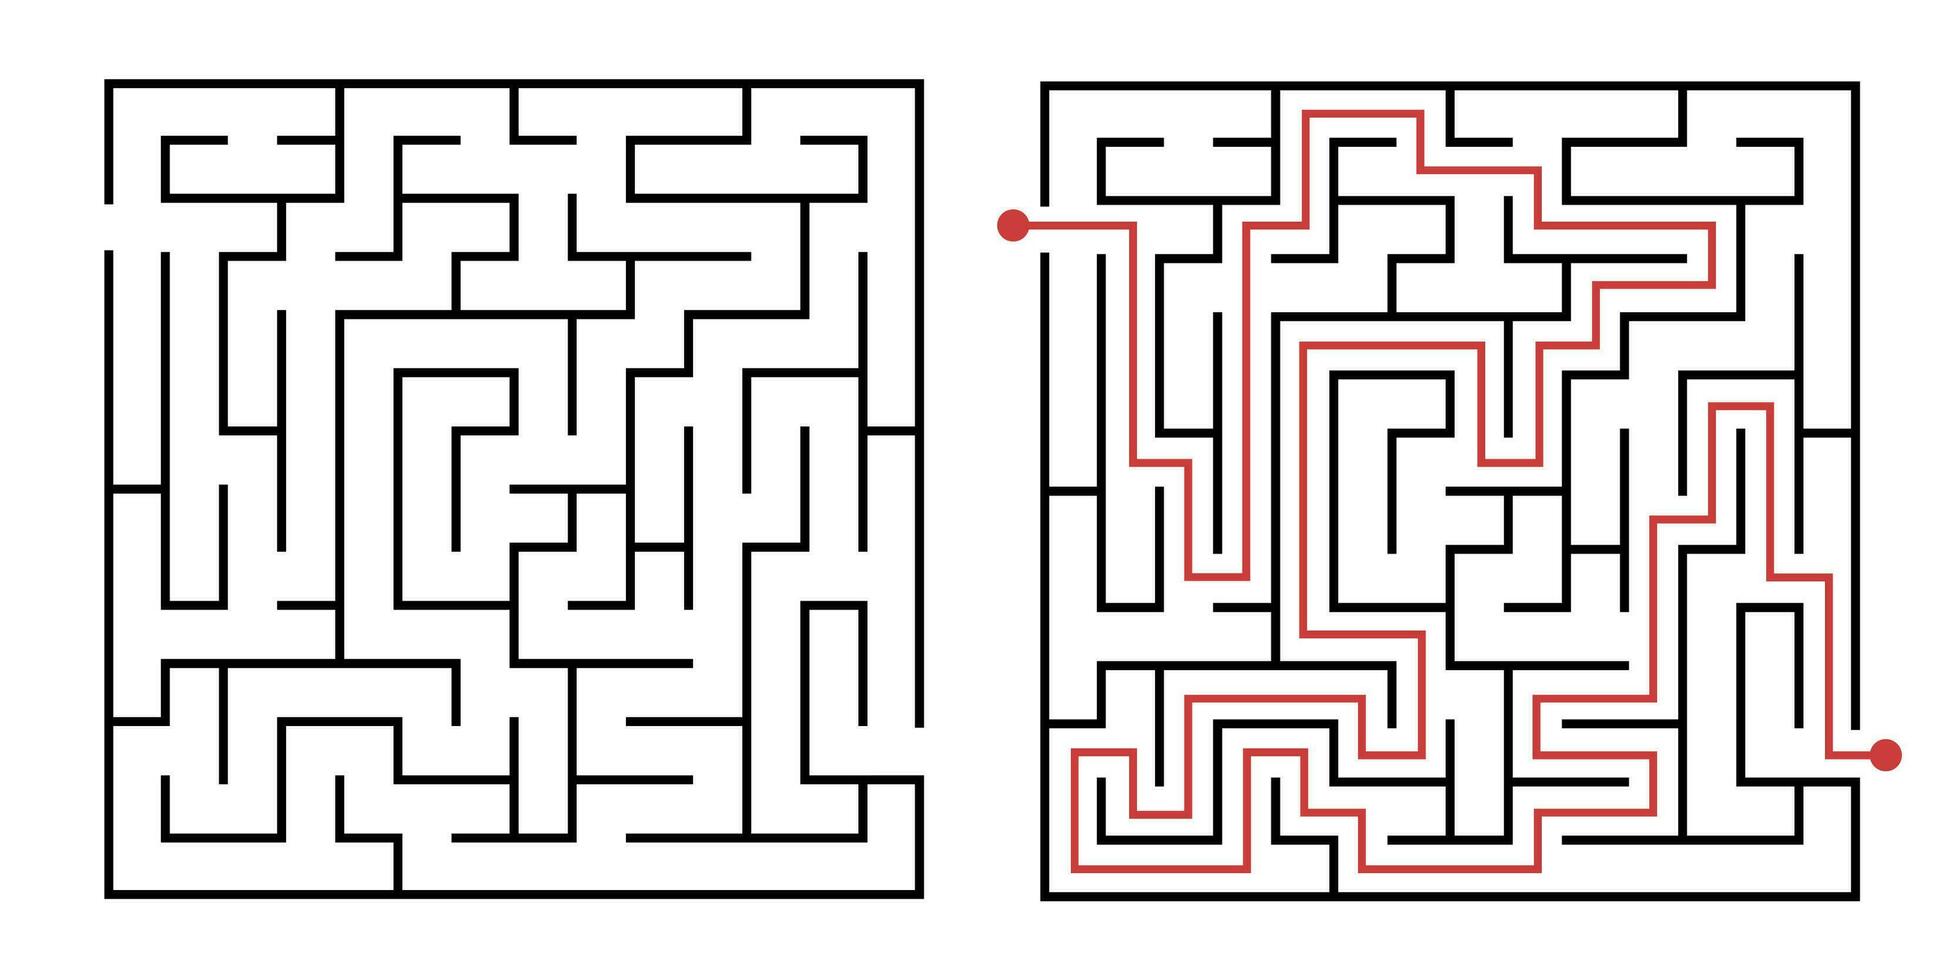 Labyrinth Spiel Weg. Platz Labyrinth, einfach Logik Spiel mit Labyrinthe Weg Vektor Illustration